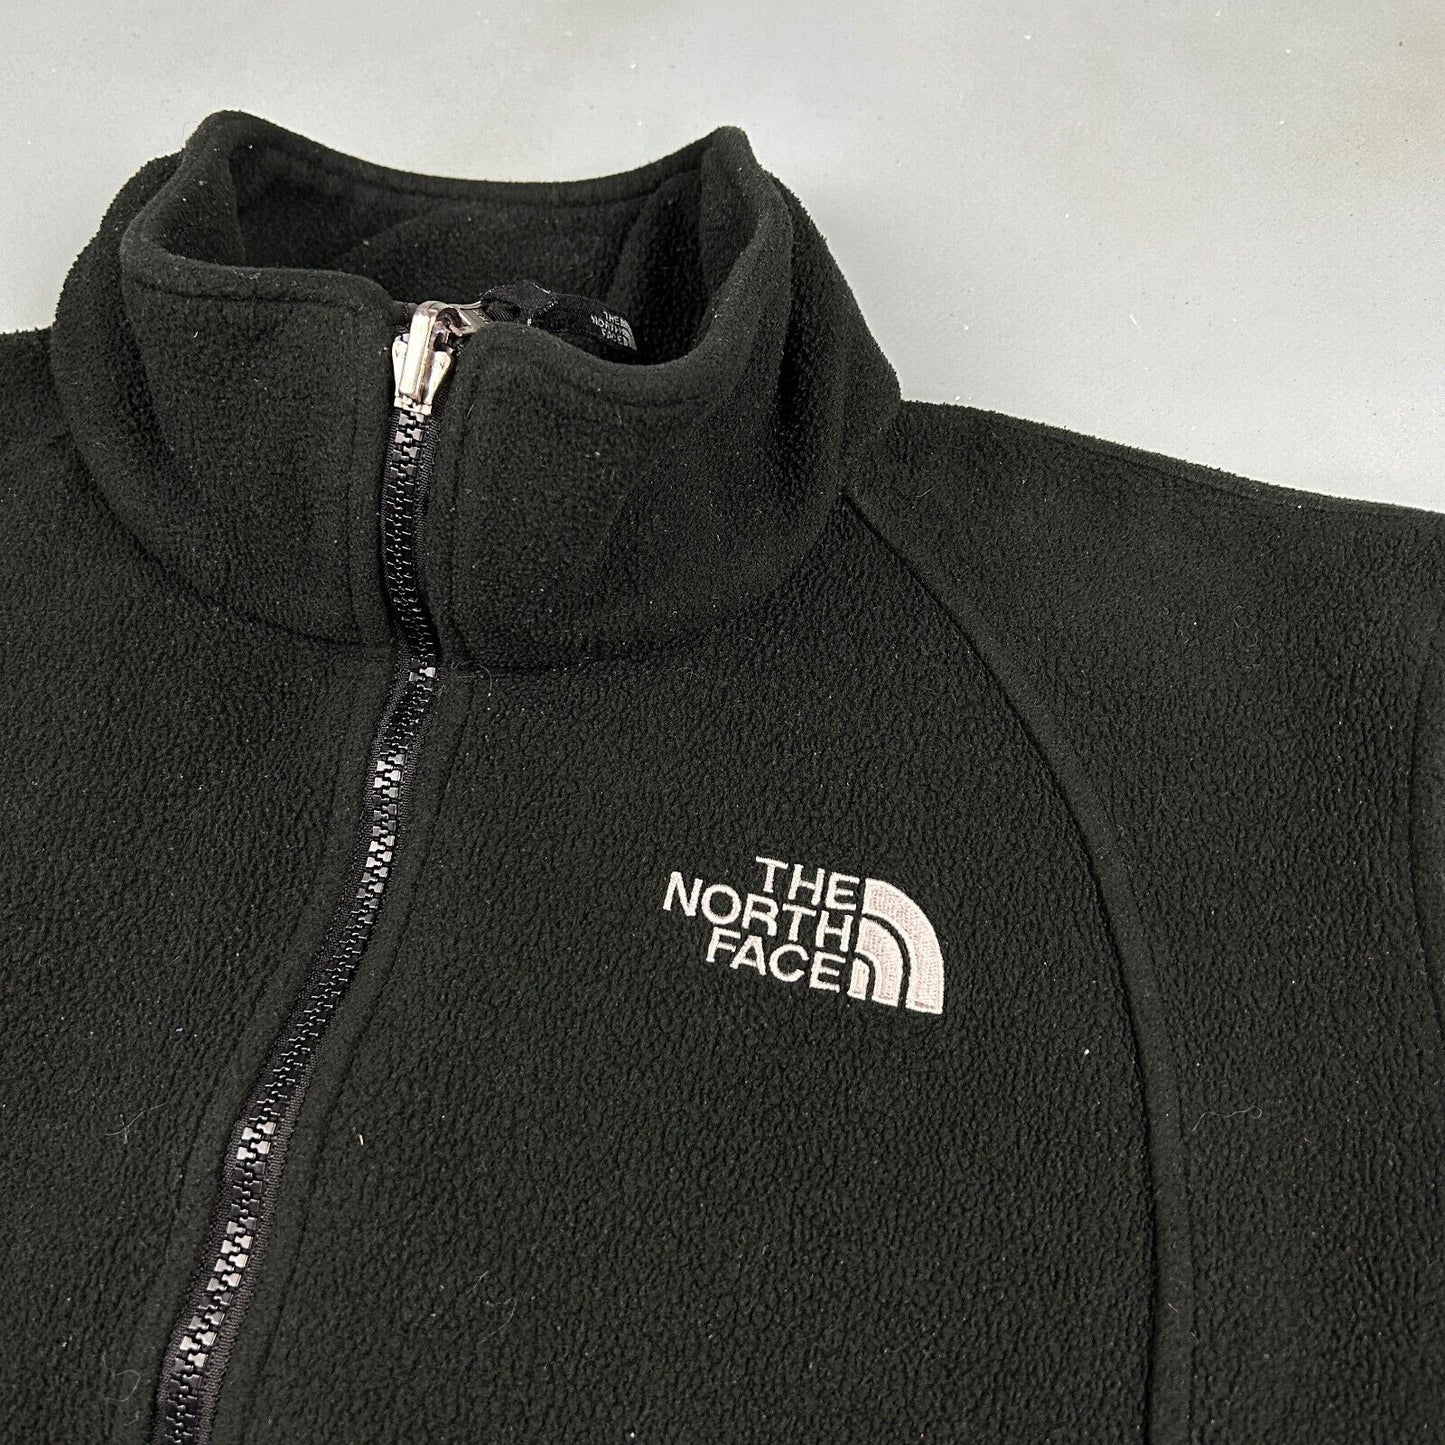 VINTAGE The North Face Black Zip Up Fleece Sweater sz Medium Adult